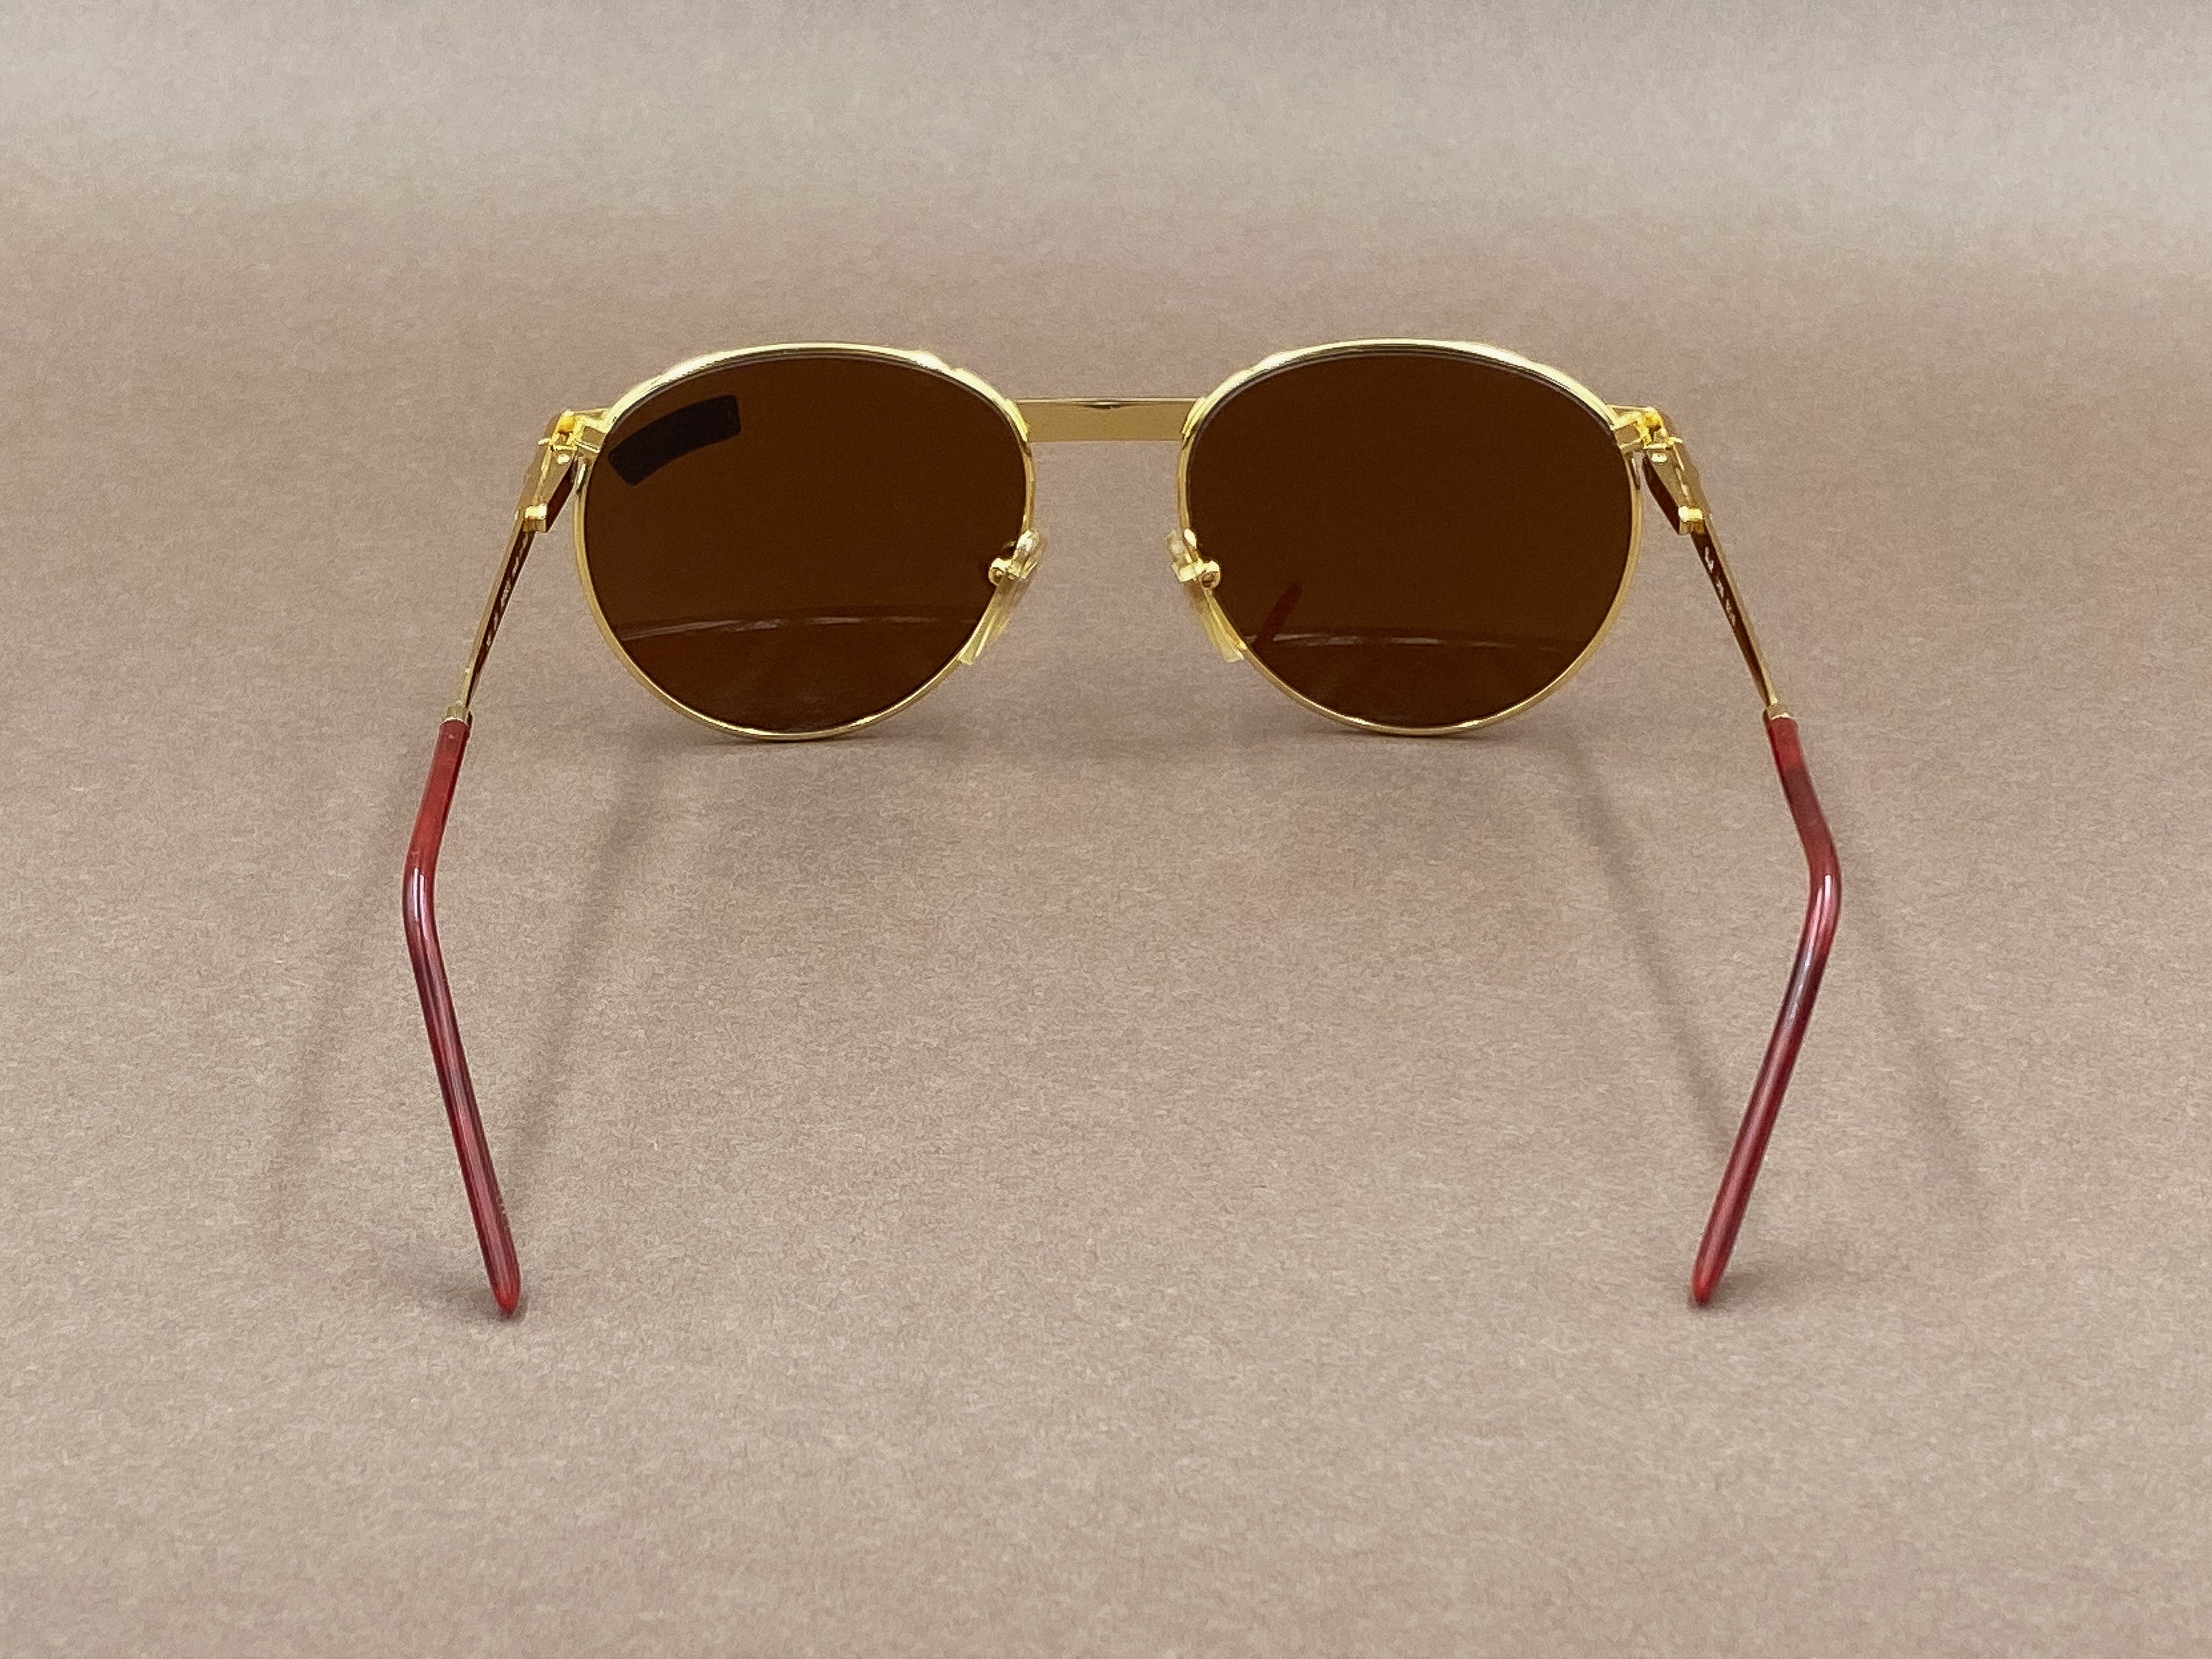 Persol Laos sunglasses